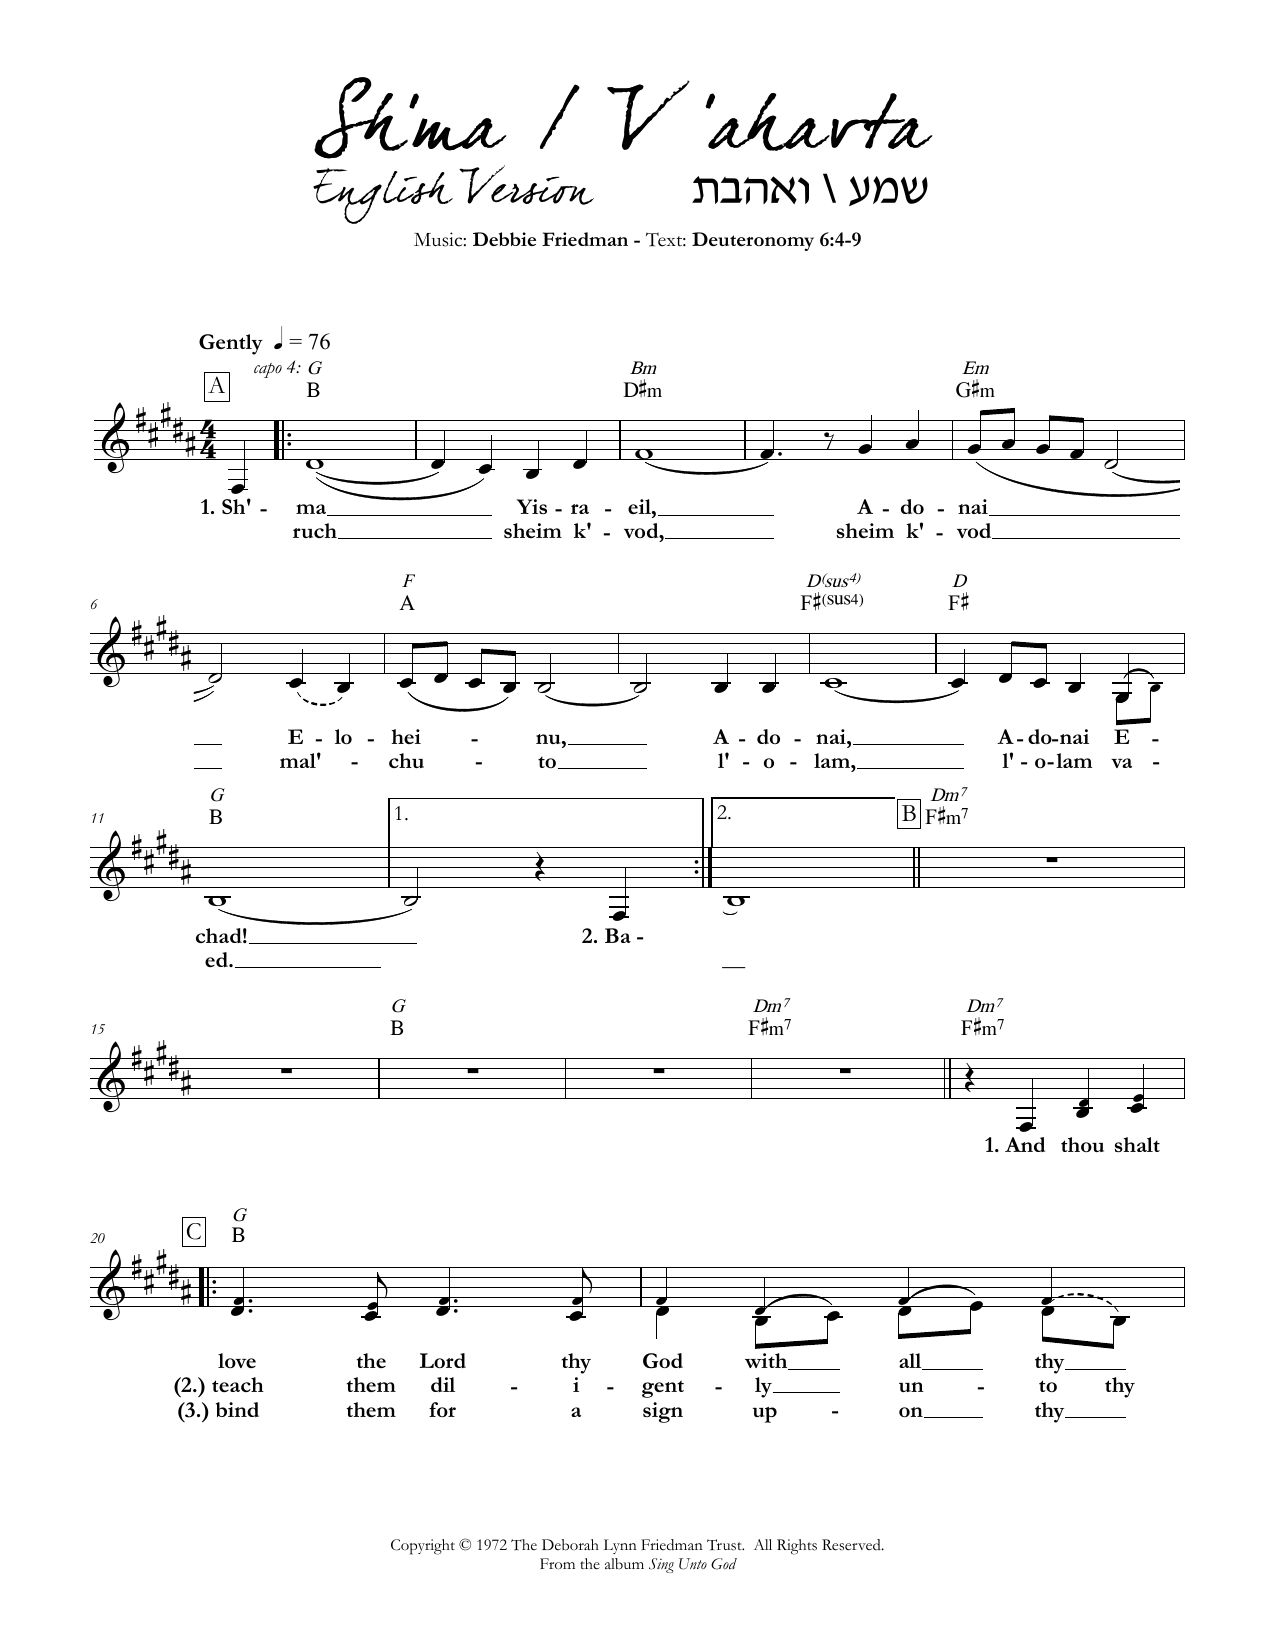 Debbie Friedman Sh'ma/V'ahavta (English version) sheet music notes and chords arranged for Lead Sheet / Fake Book